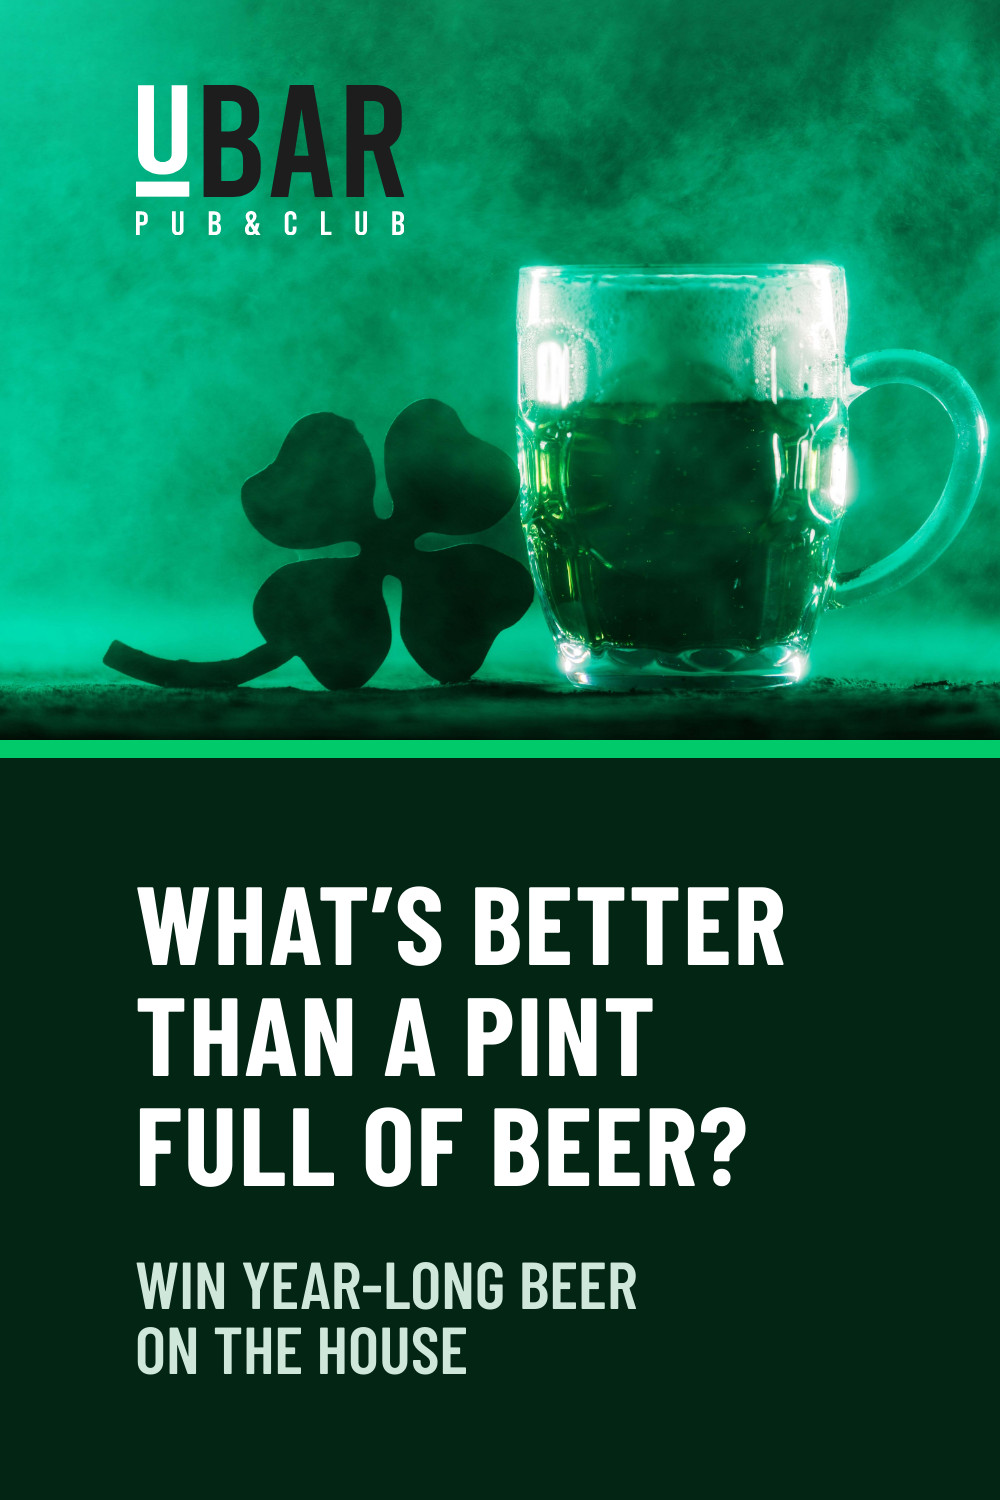 Saint Patrick's Pint Full of Beer Inline Rectangle 300x250